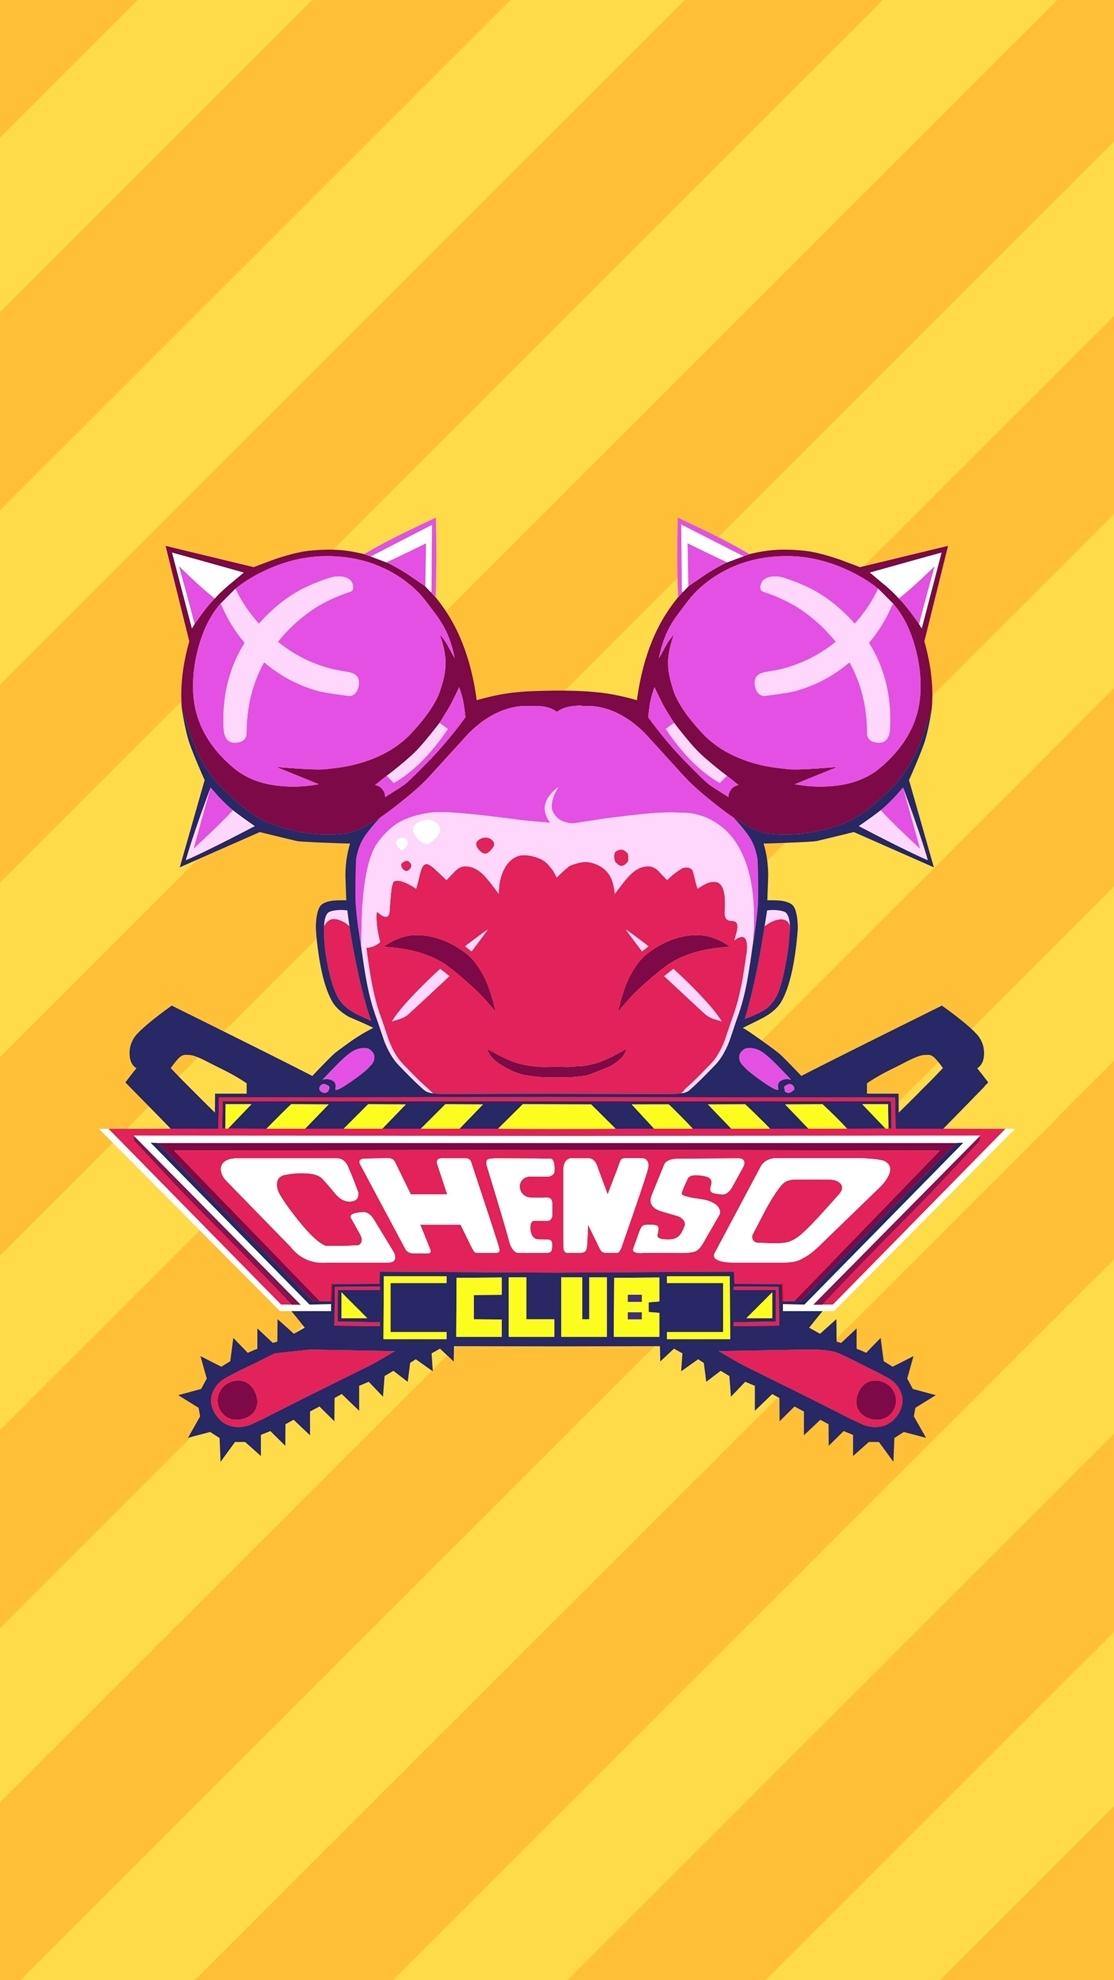 Chenso Club | LATAM (908e9ad9-efba-48f0-8598-f603deae26b6)